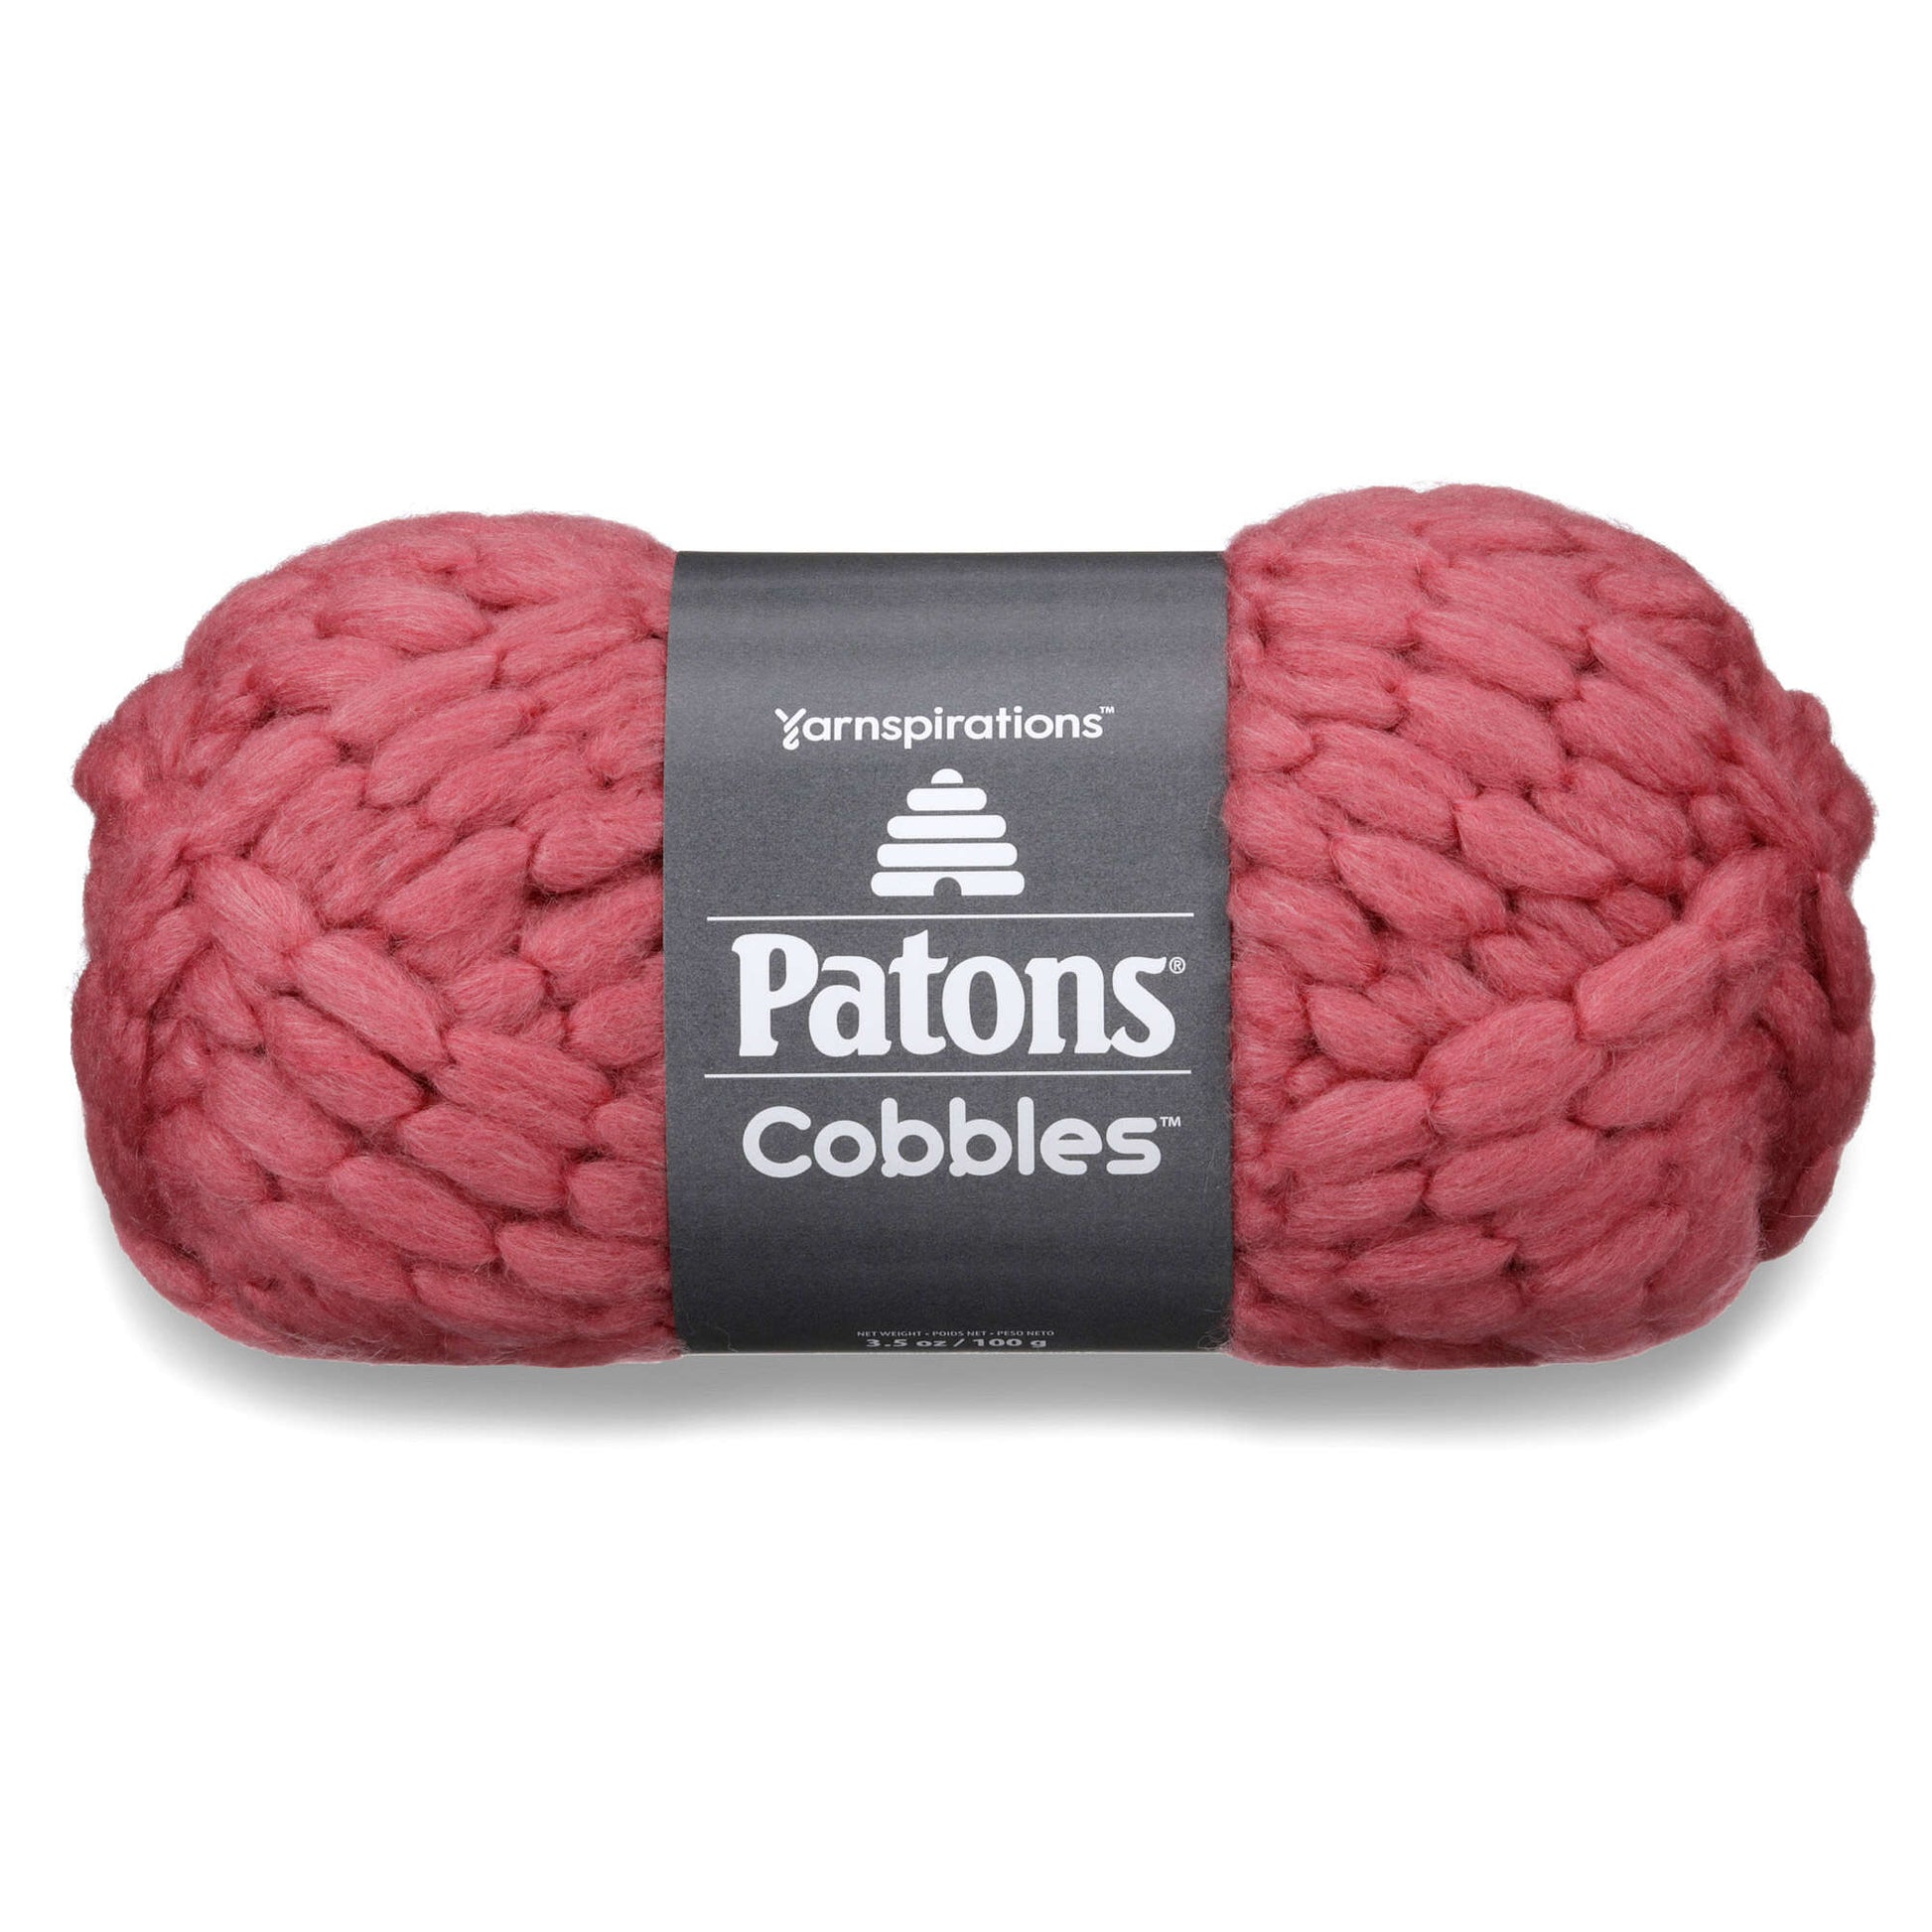 Patons Cobbles Yarn - Discontinued Shades